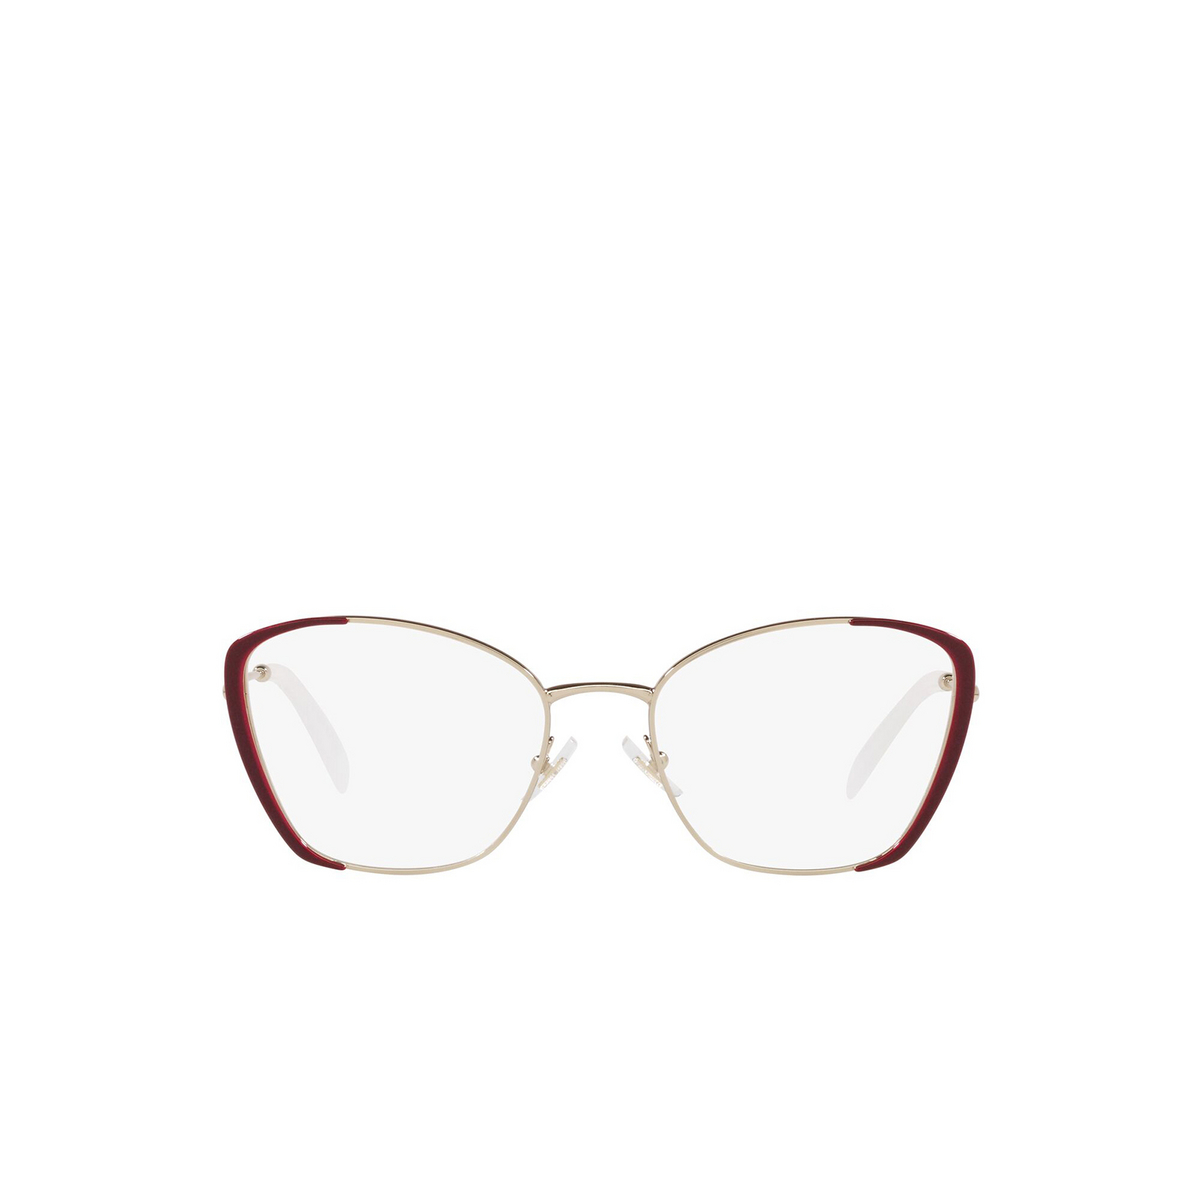 Miu Miu® Butterfly Eyeglasses: MU 51UV color Bordeaux 09X1O1 - front view.